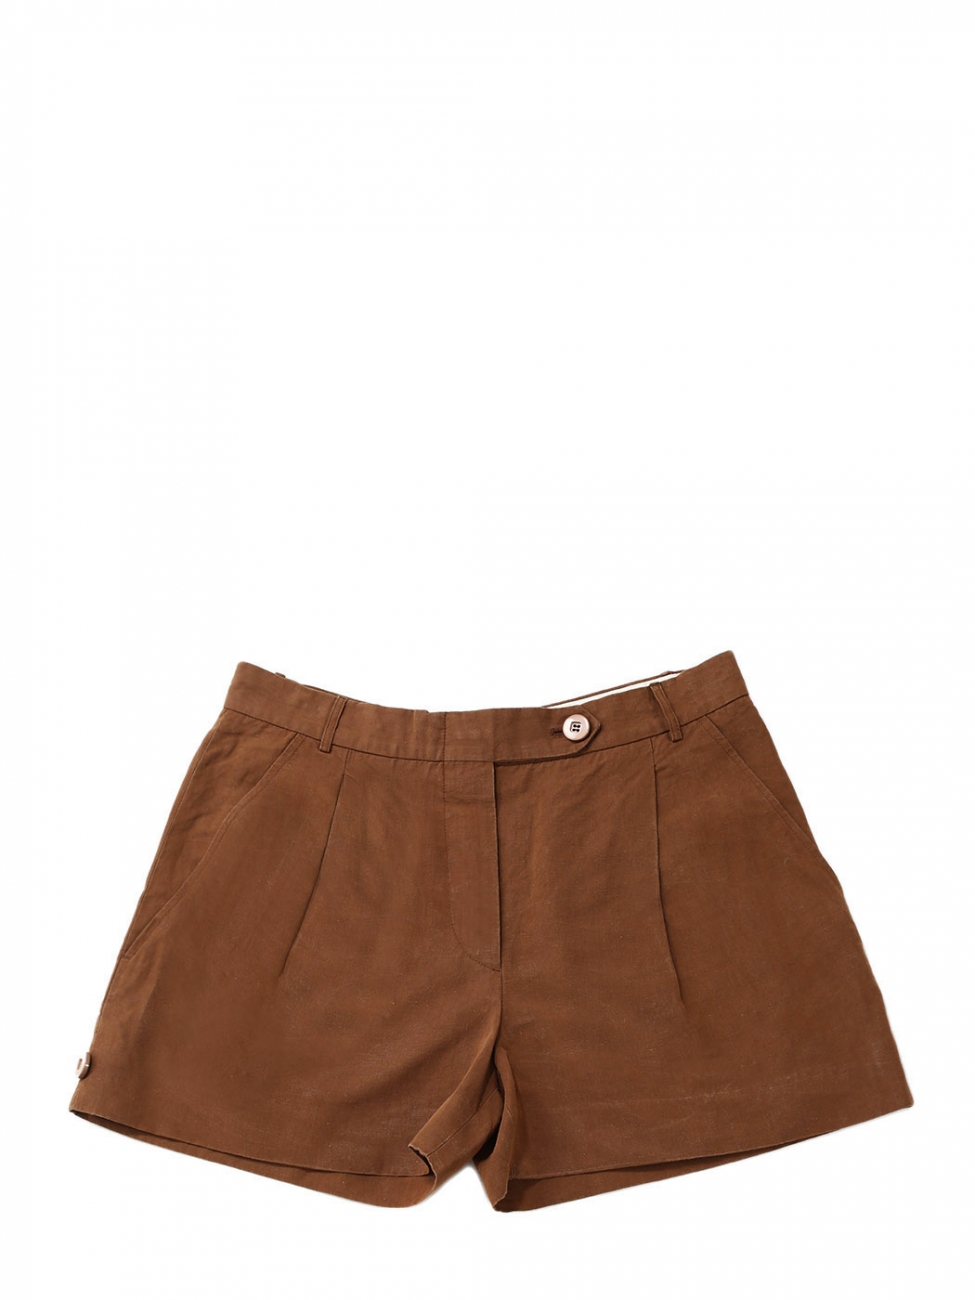 https://louiseparis.fr/86308-thickbox/chloe-caramel-brown-linen-shorts-size-m-l.jpg